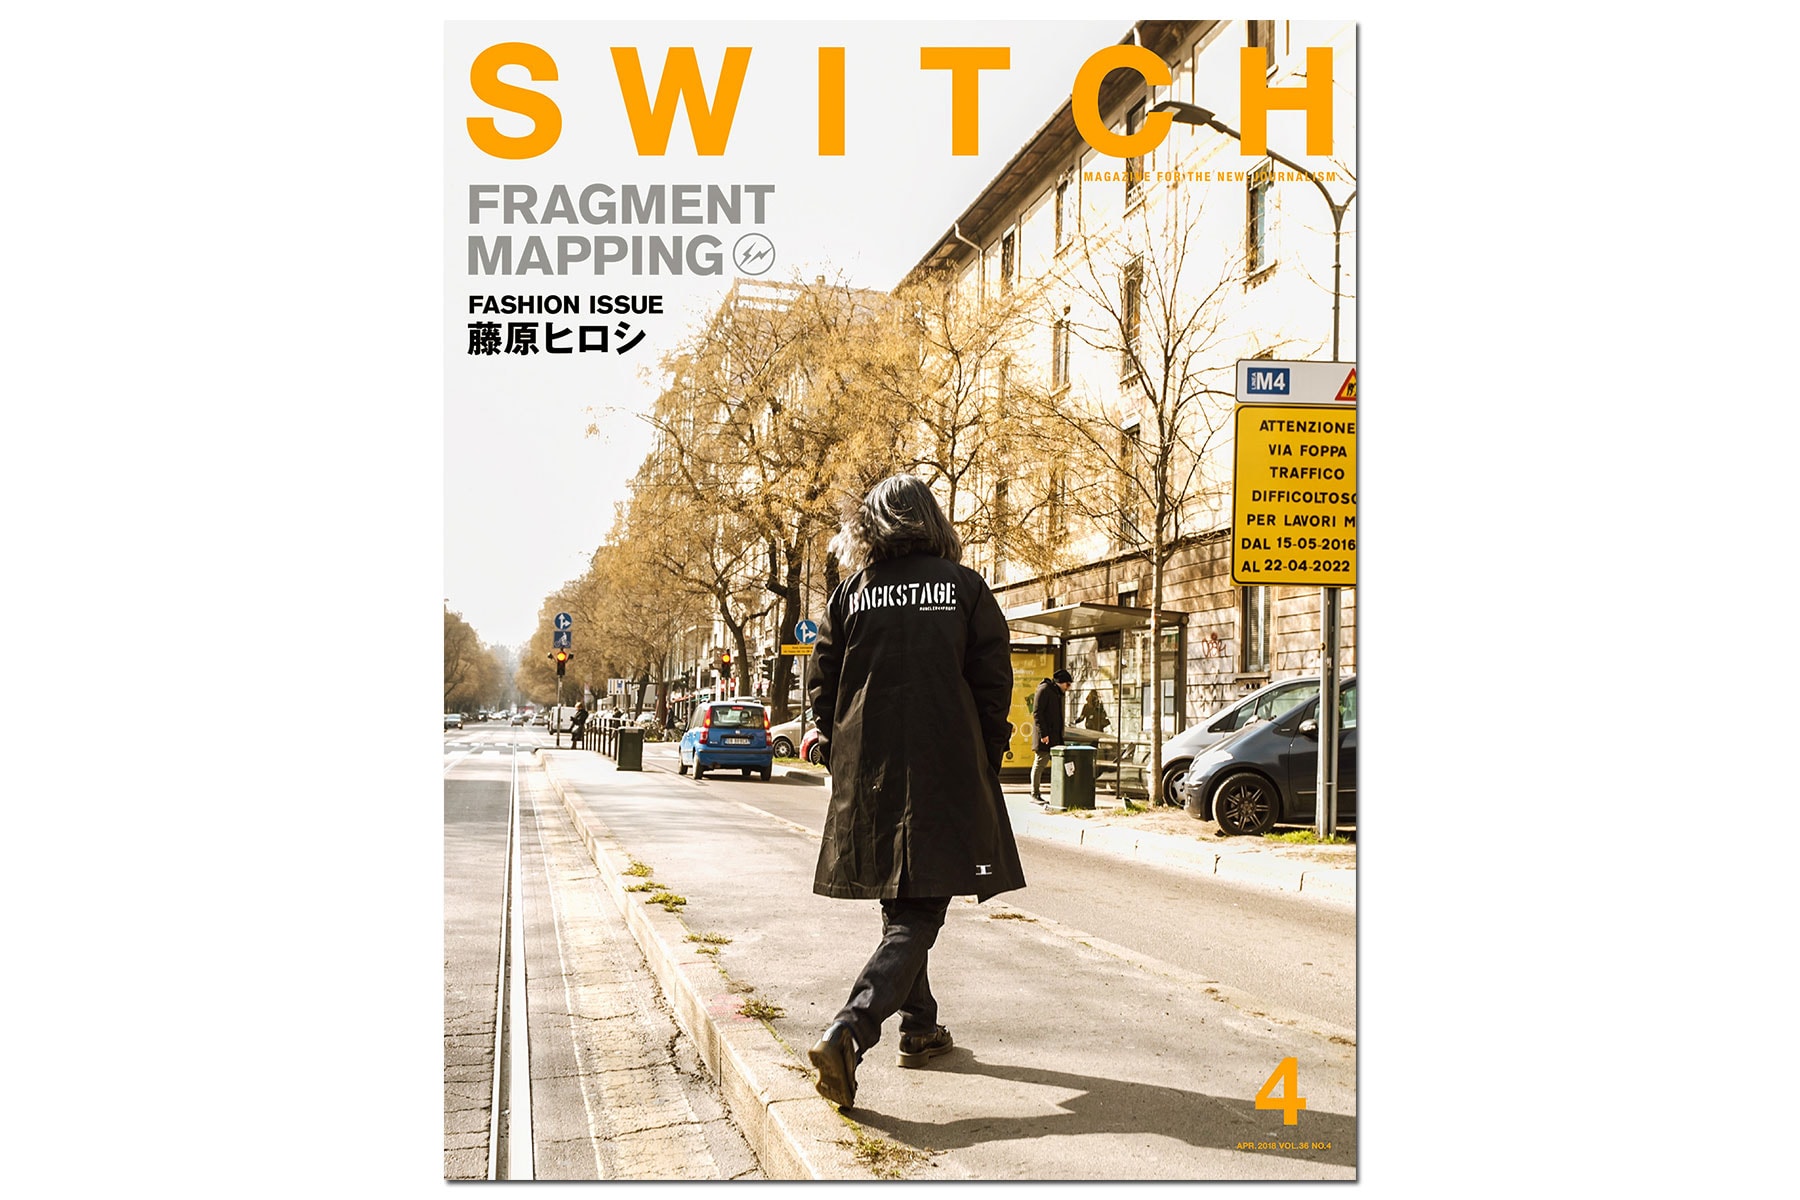 FRAGMENT MAPPING - 藤原浩登上最新《SWITCH》封面